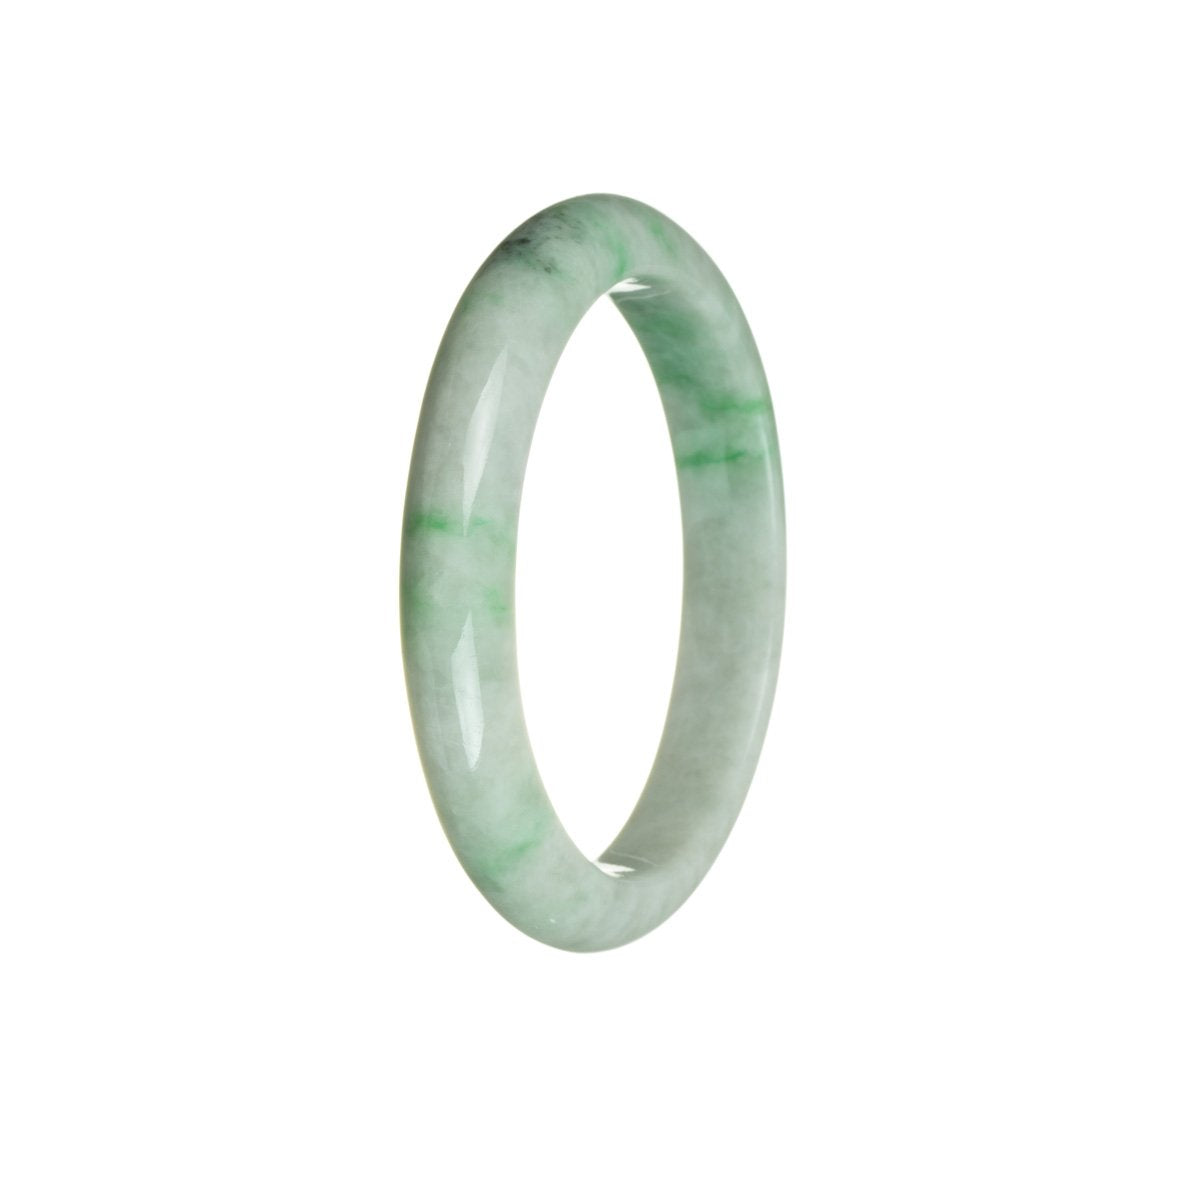 55mm White with Green Jadeite Jade Bangle Bracelet